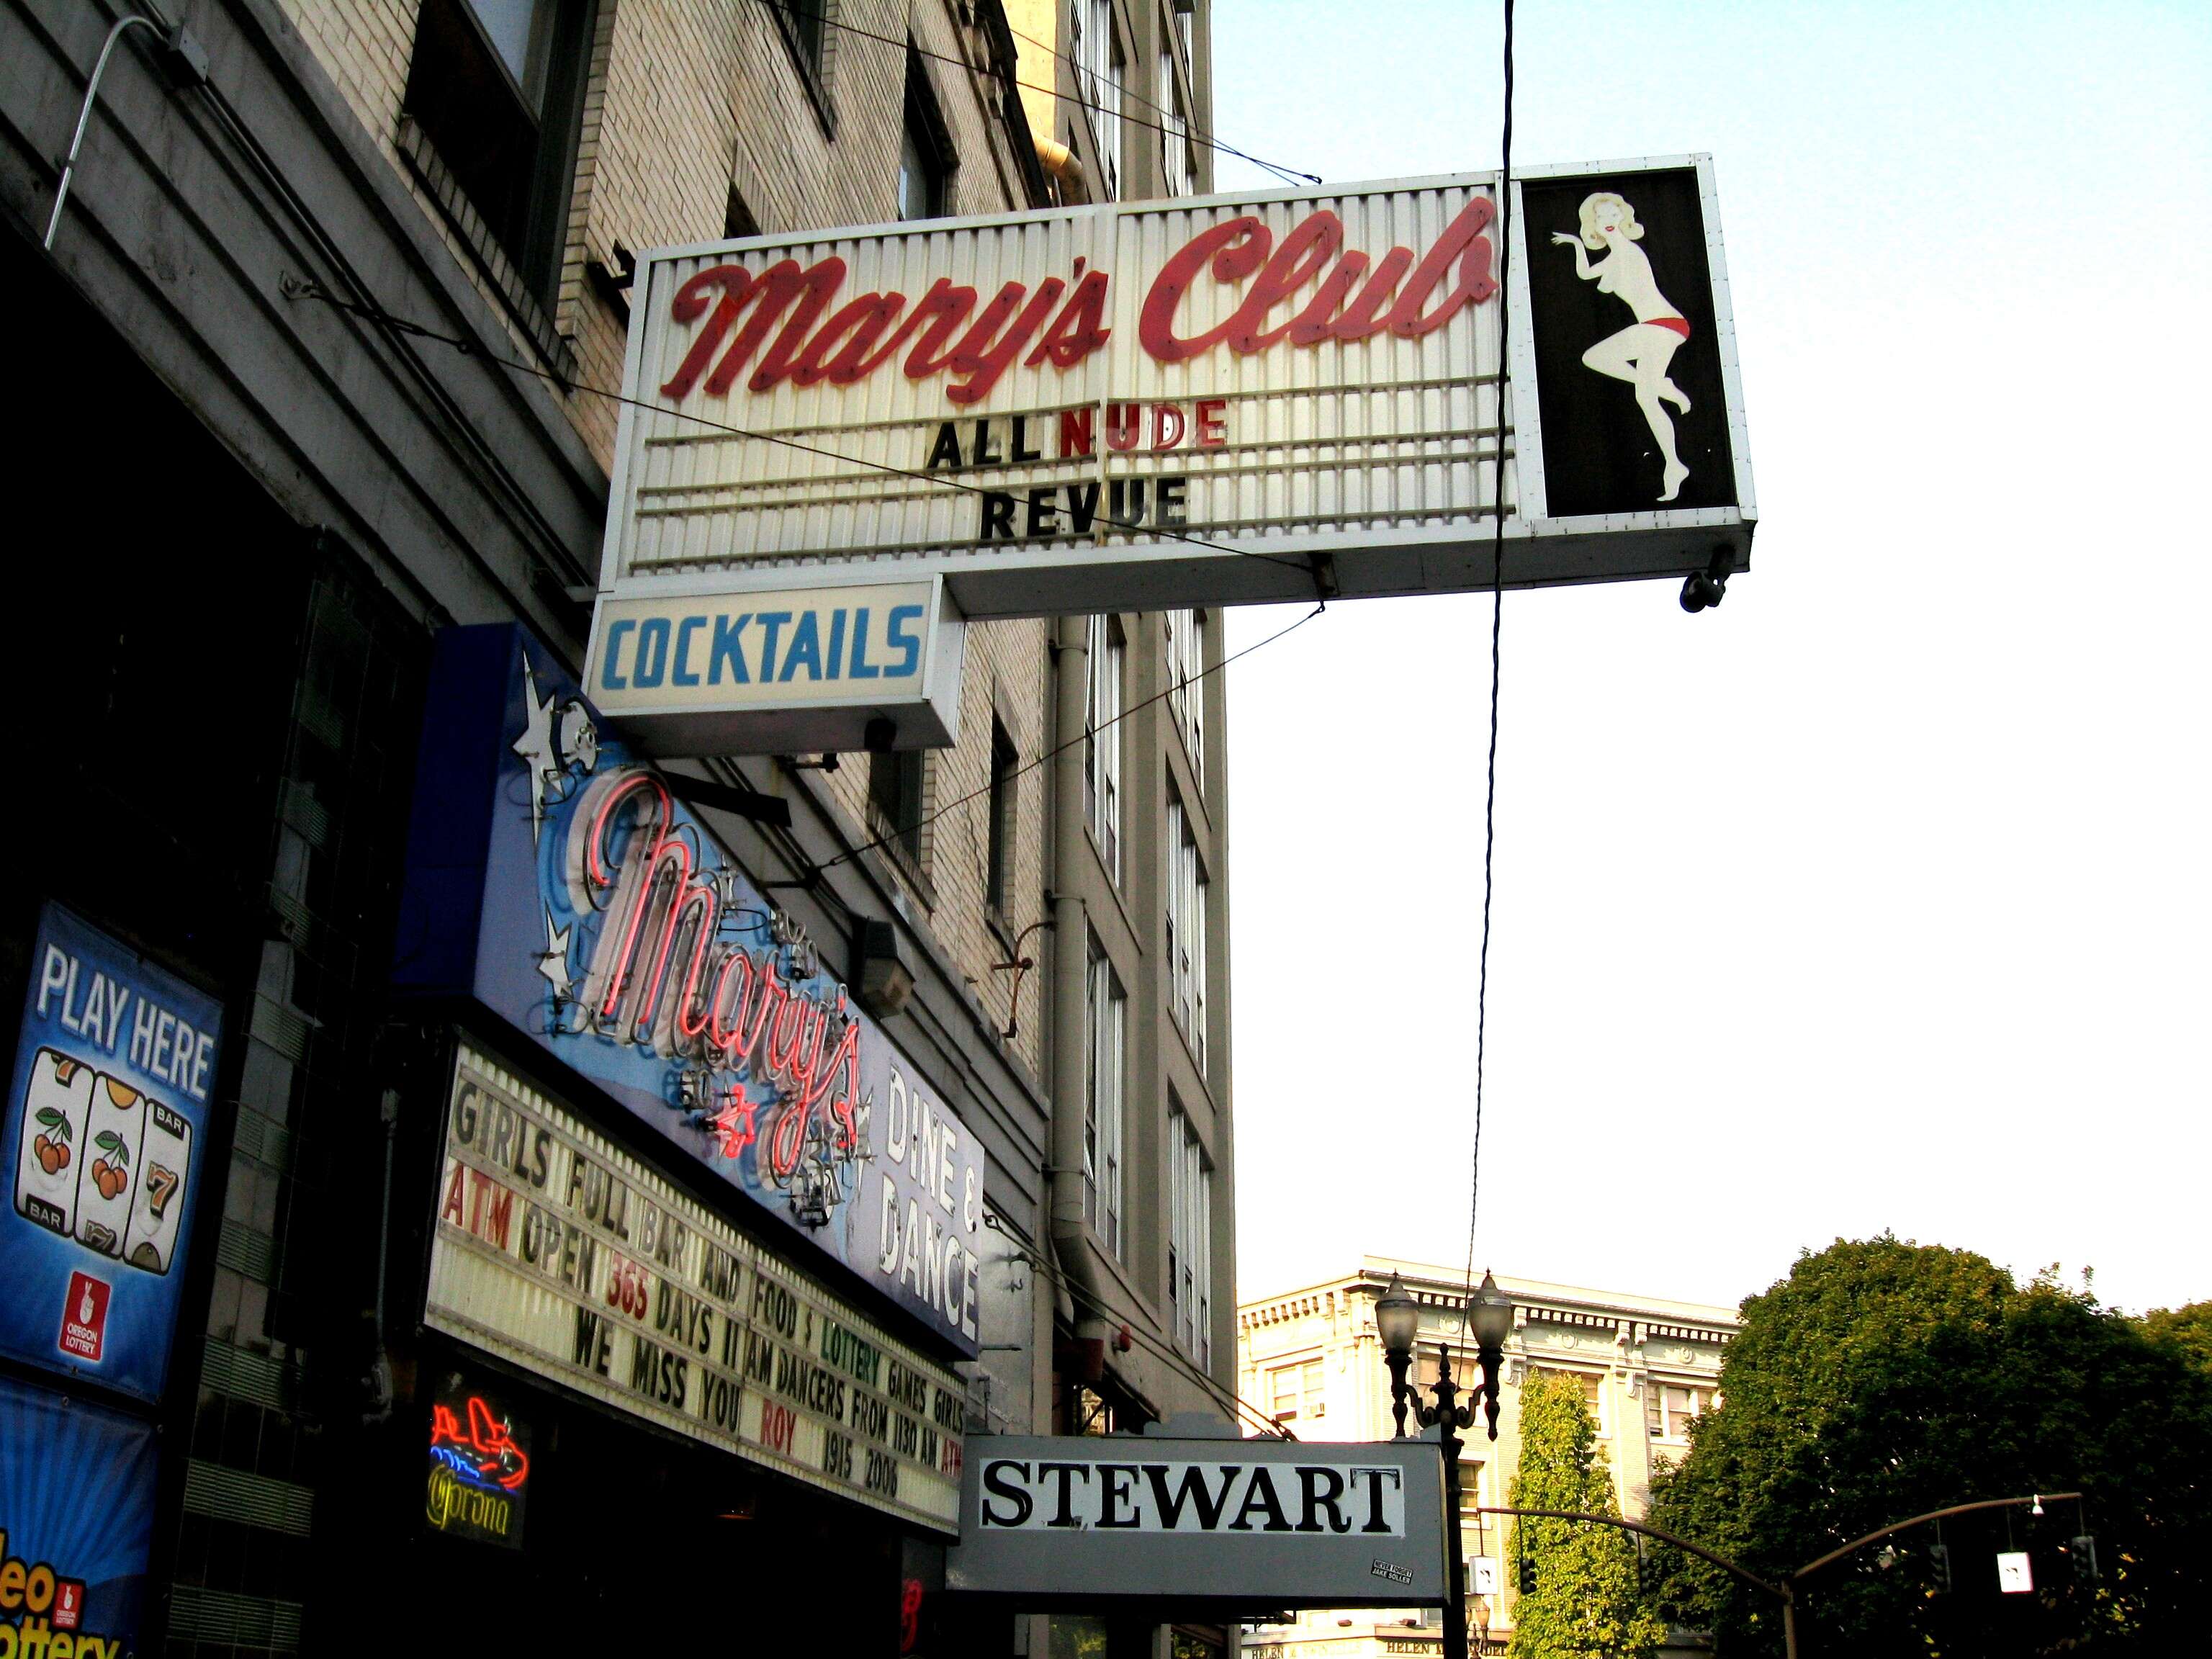 Mary's Club